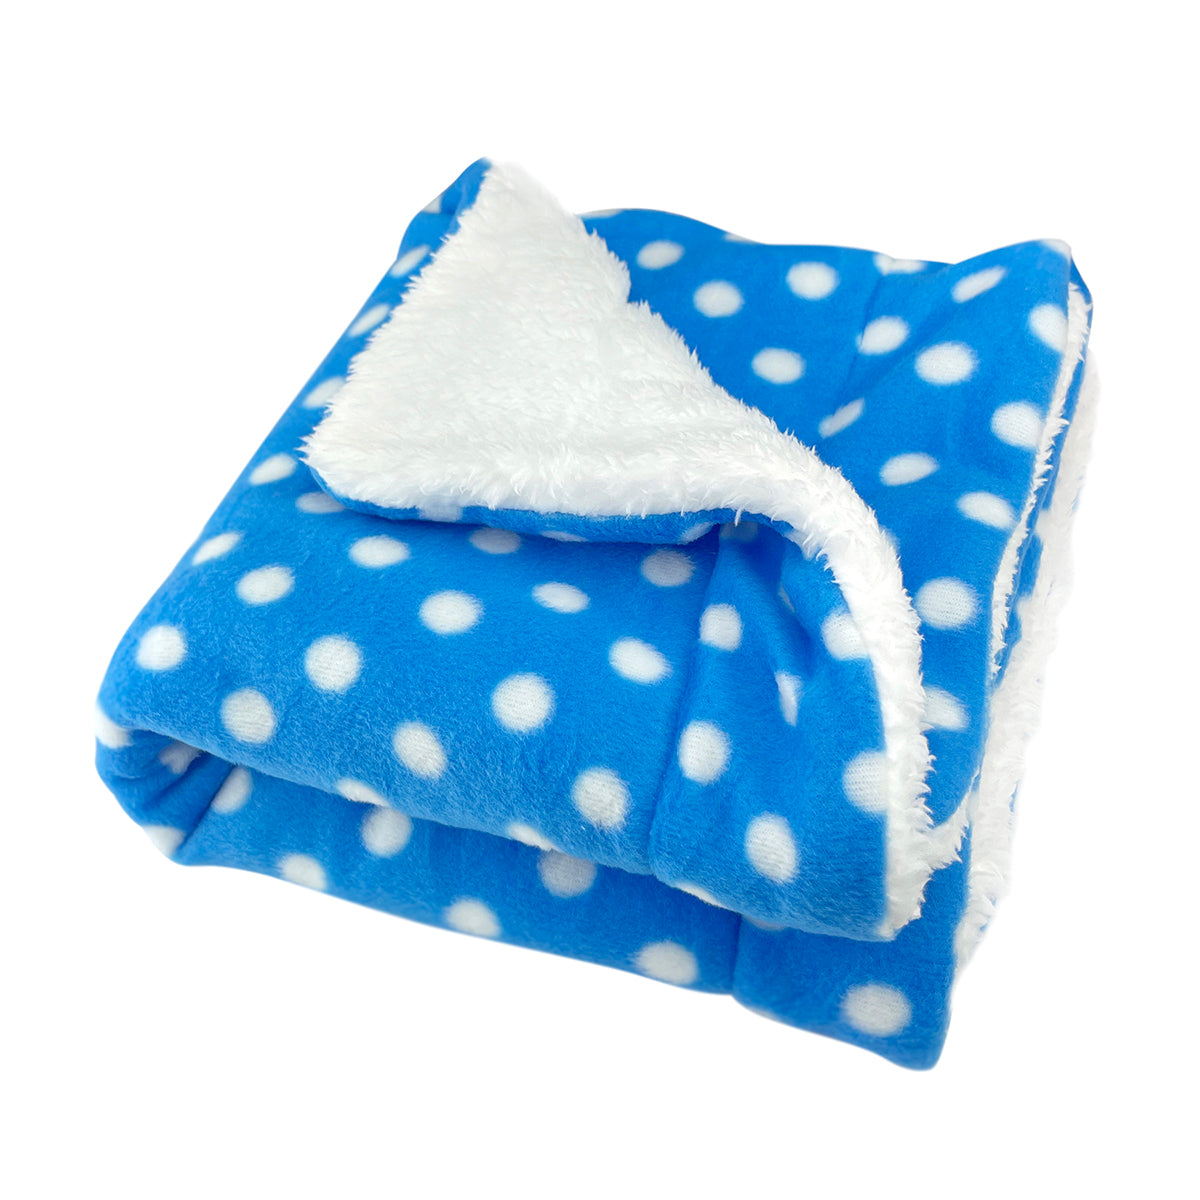 Double Layered Blue with White Polka Dots Fleece/Plush Blanket